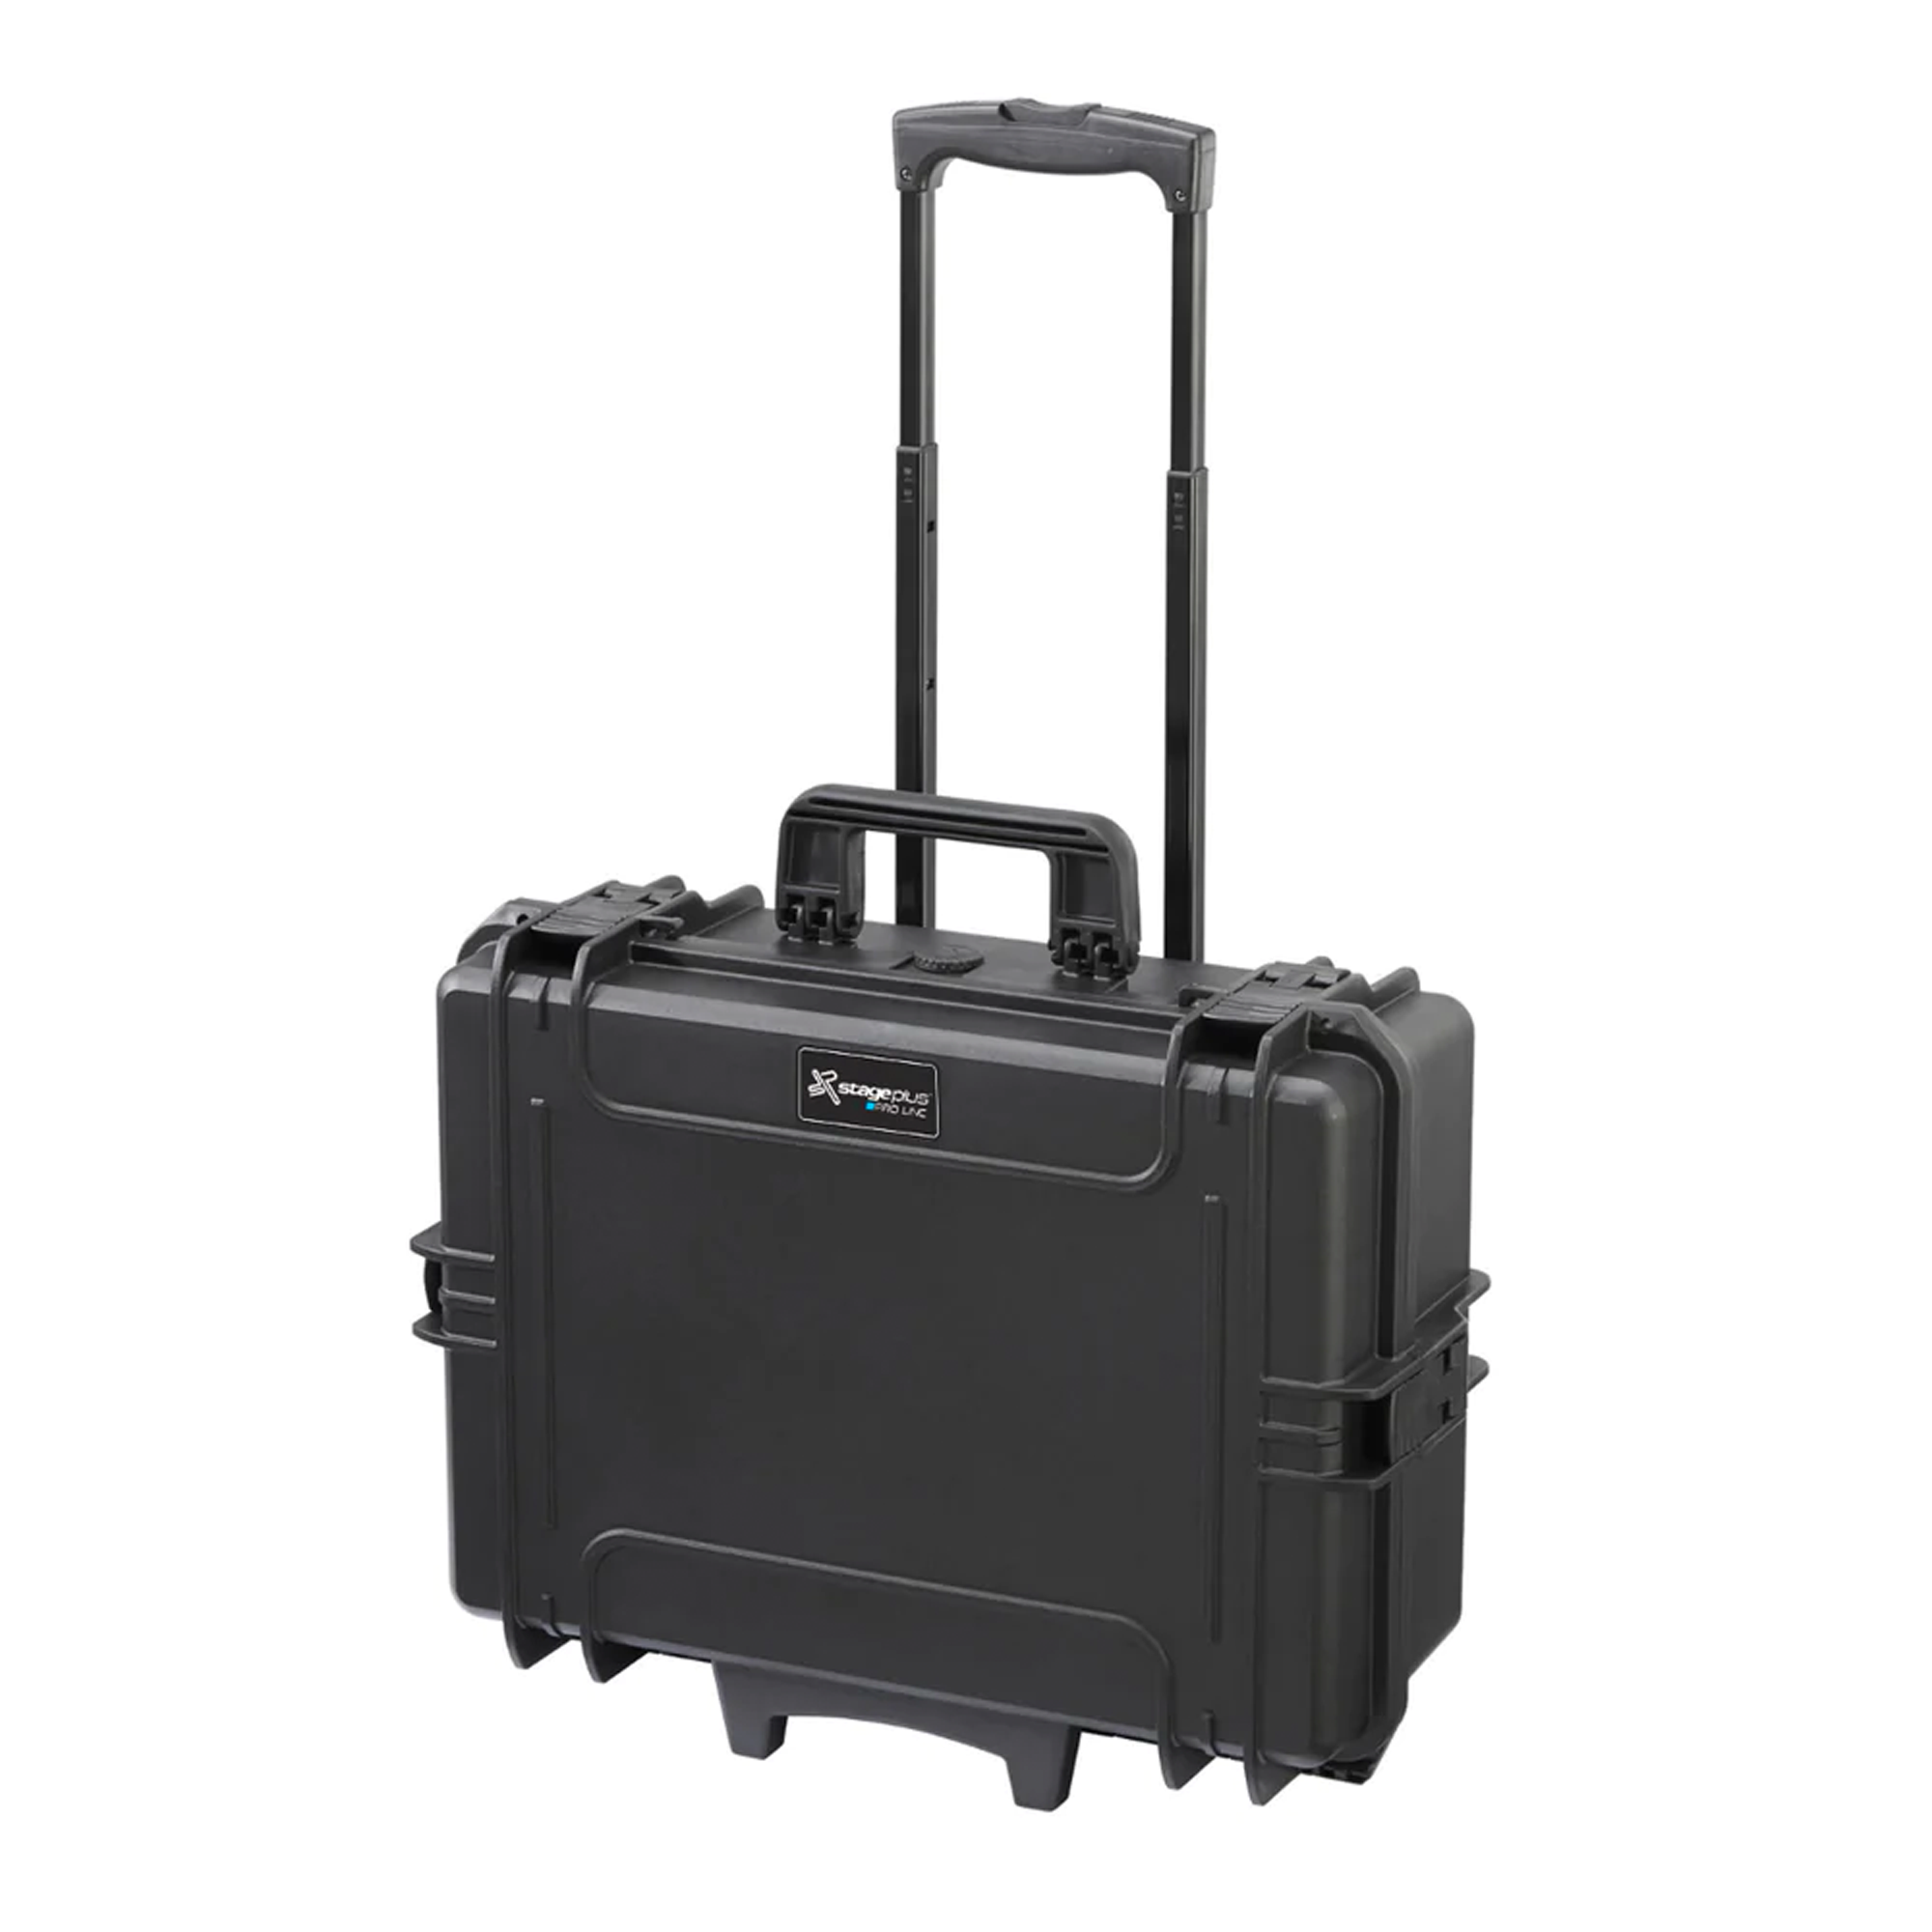 Stage Plus PRO 505STR Black Trolley Case, Cubed Foam, ID: L500xW350xH194mm